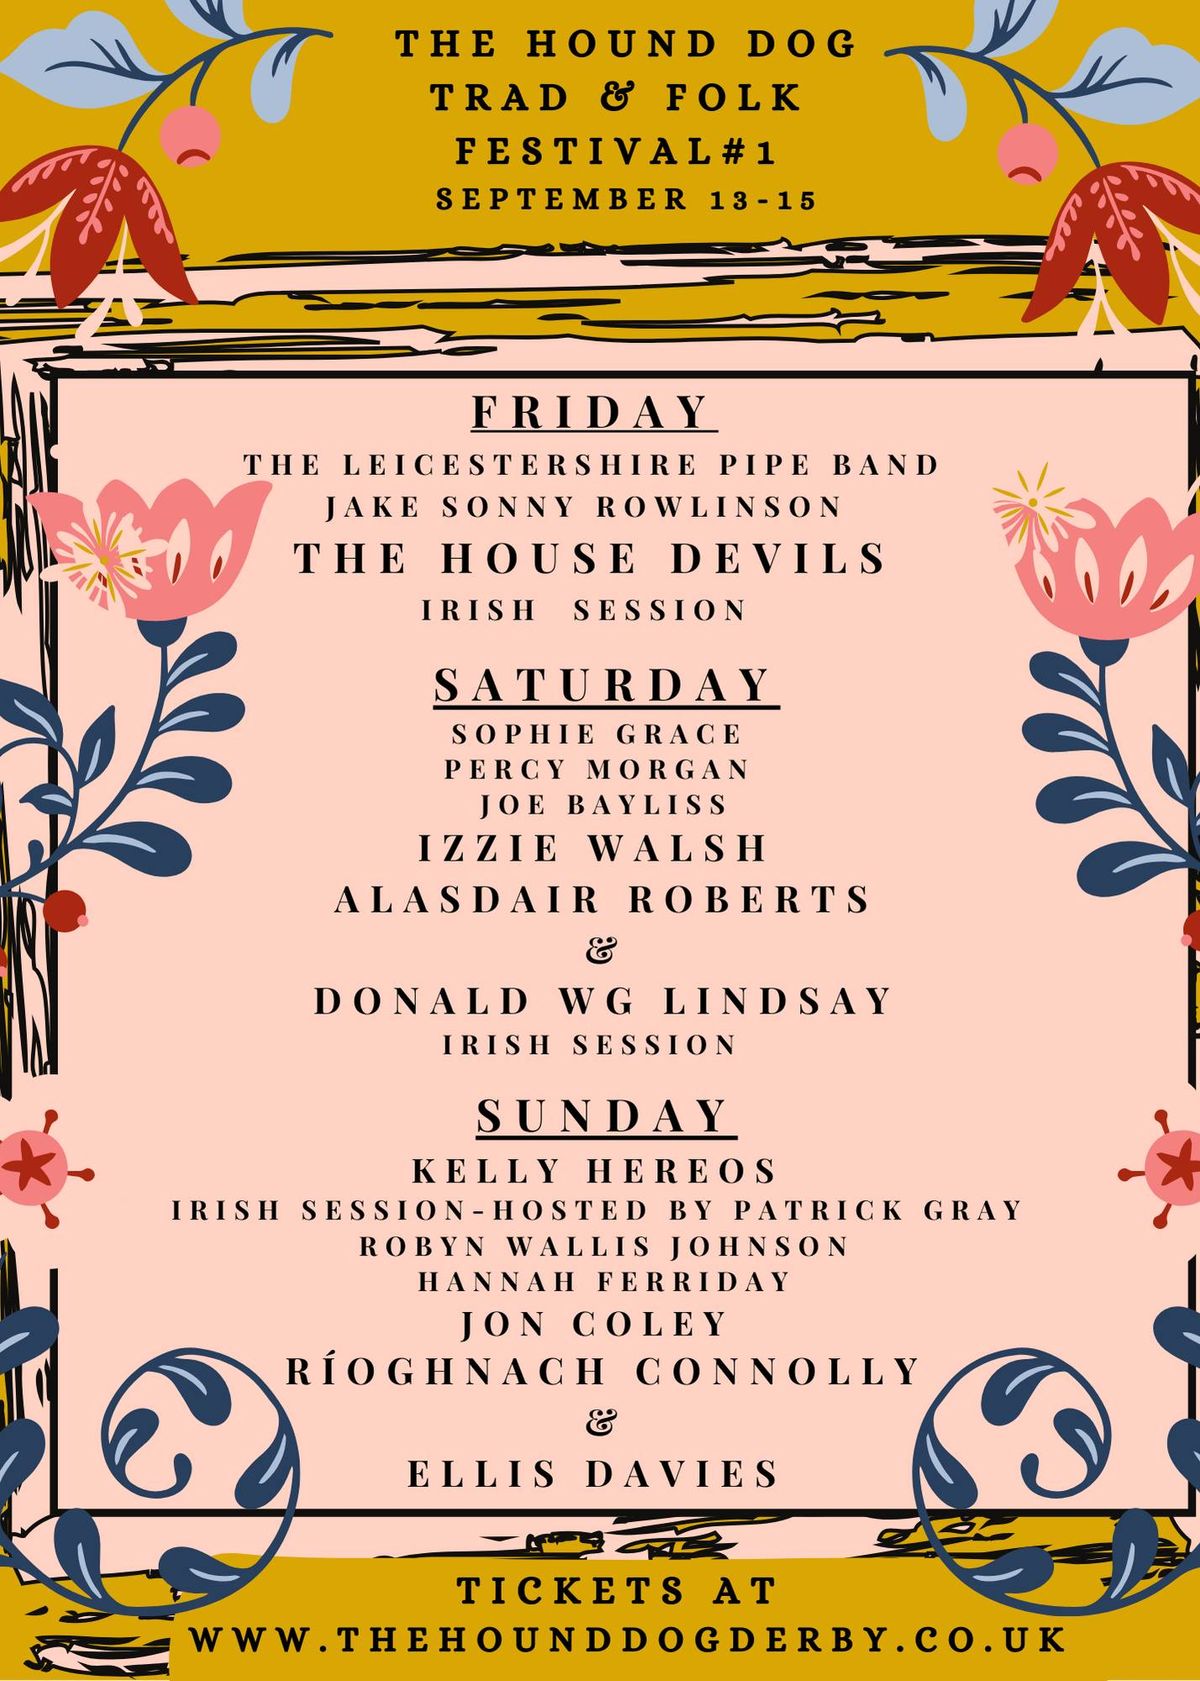 The Hound Dog Trad & Folk Festival!